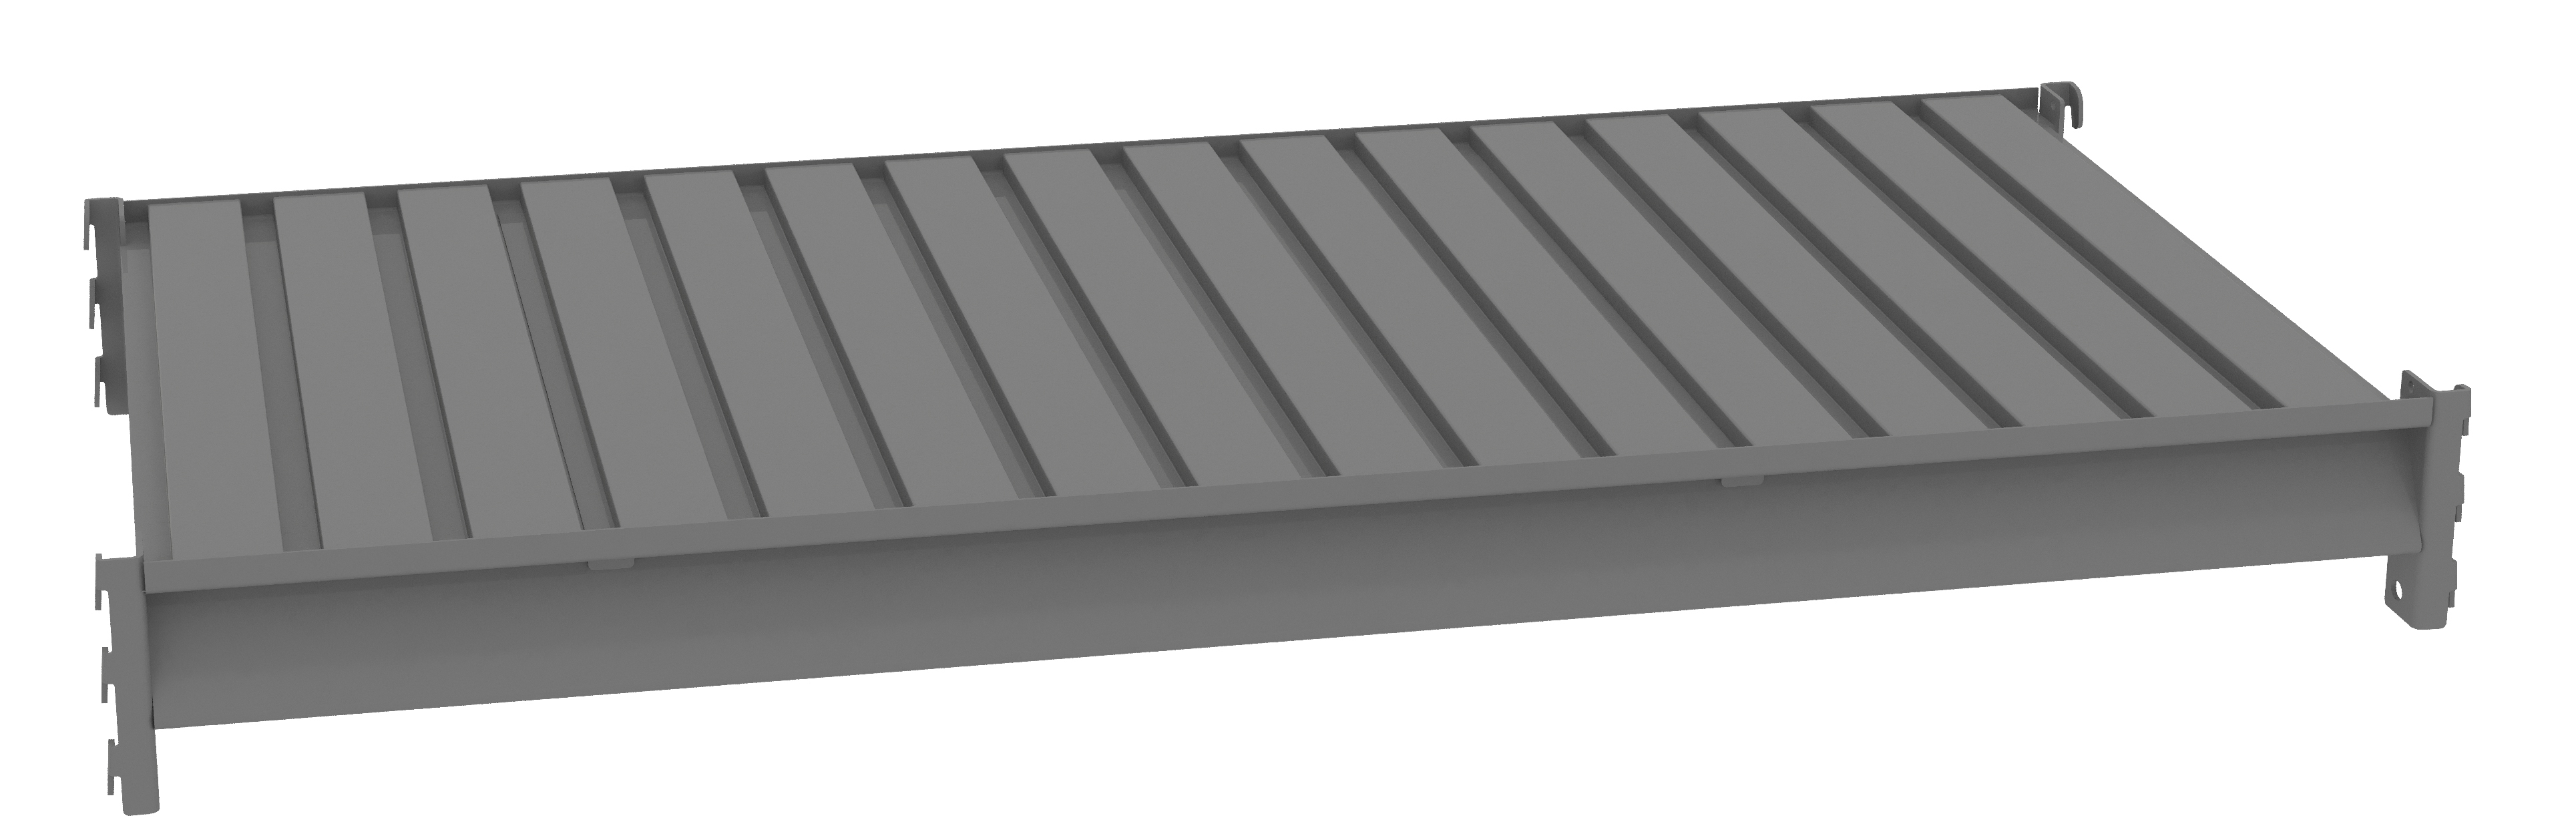 Tennsco BU-4824C Additional Level for Bulk Storage Rack, 48 in W x 24 in D, Corrugated Steel Decking